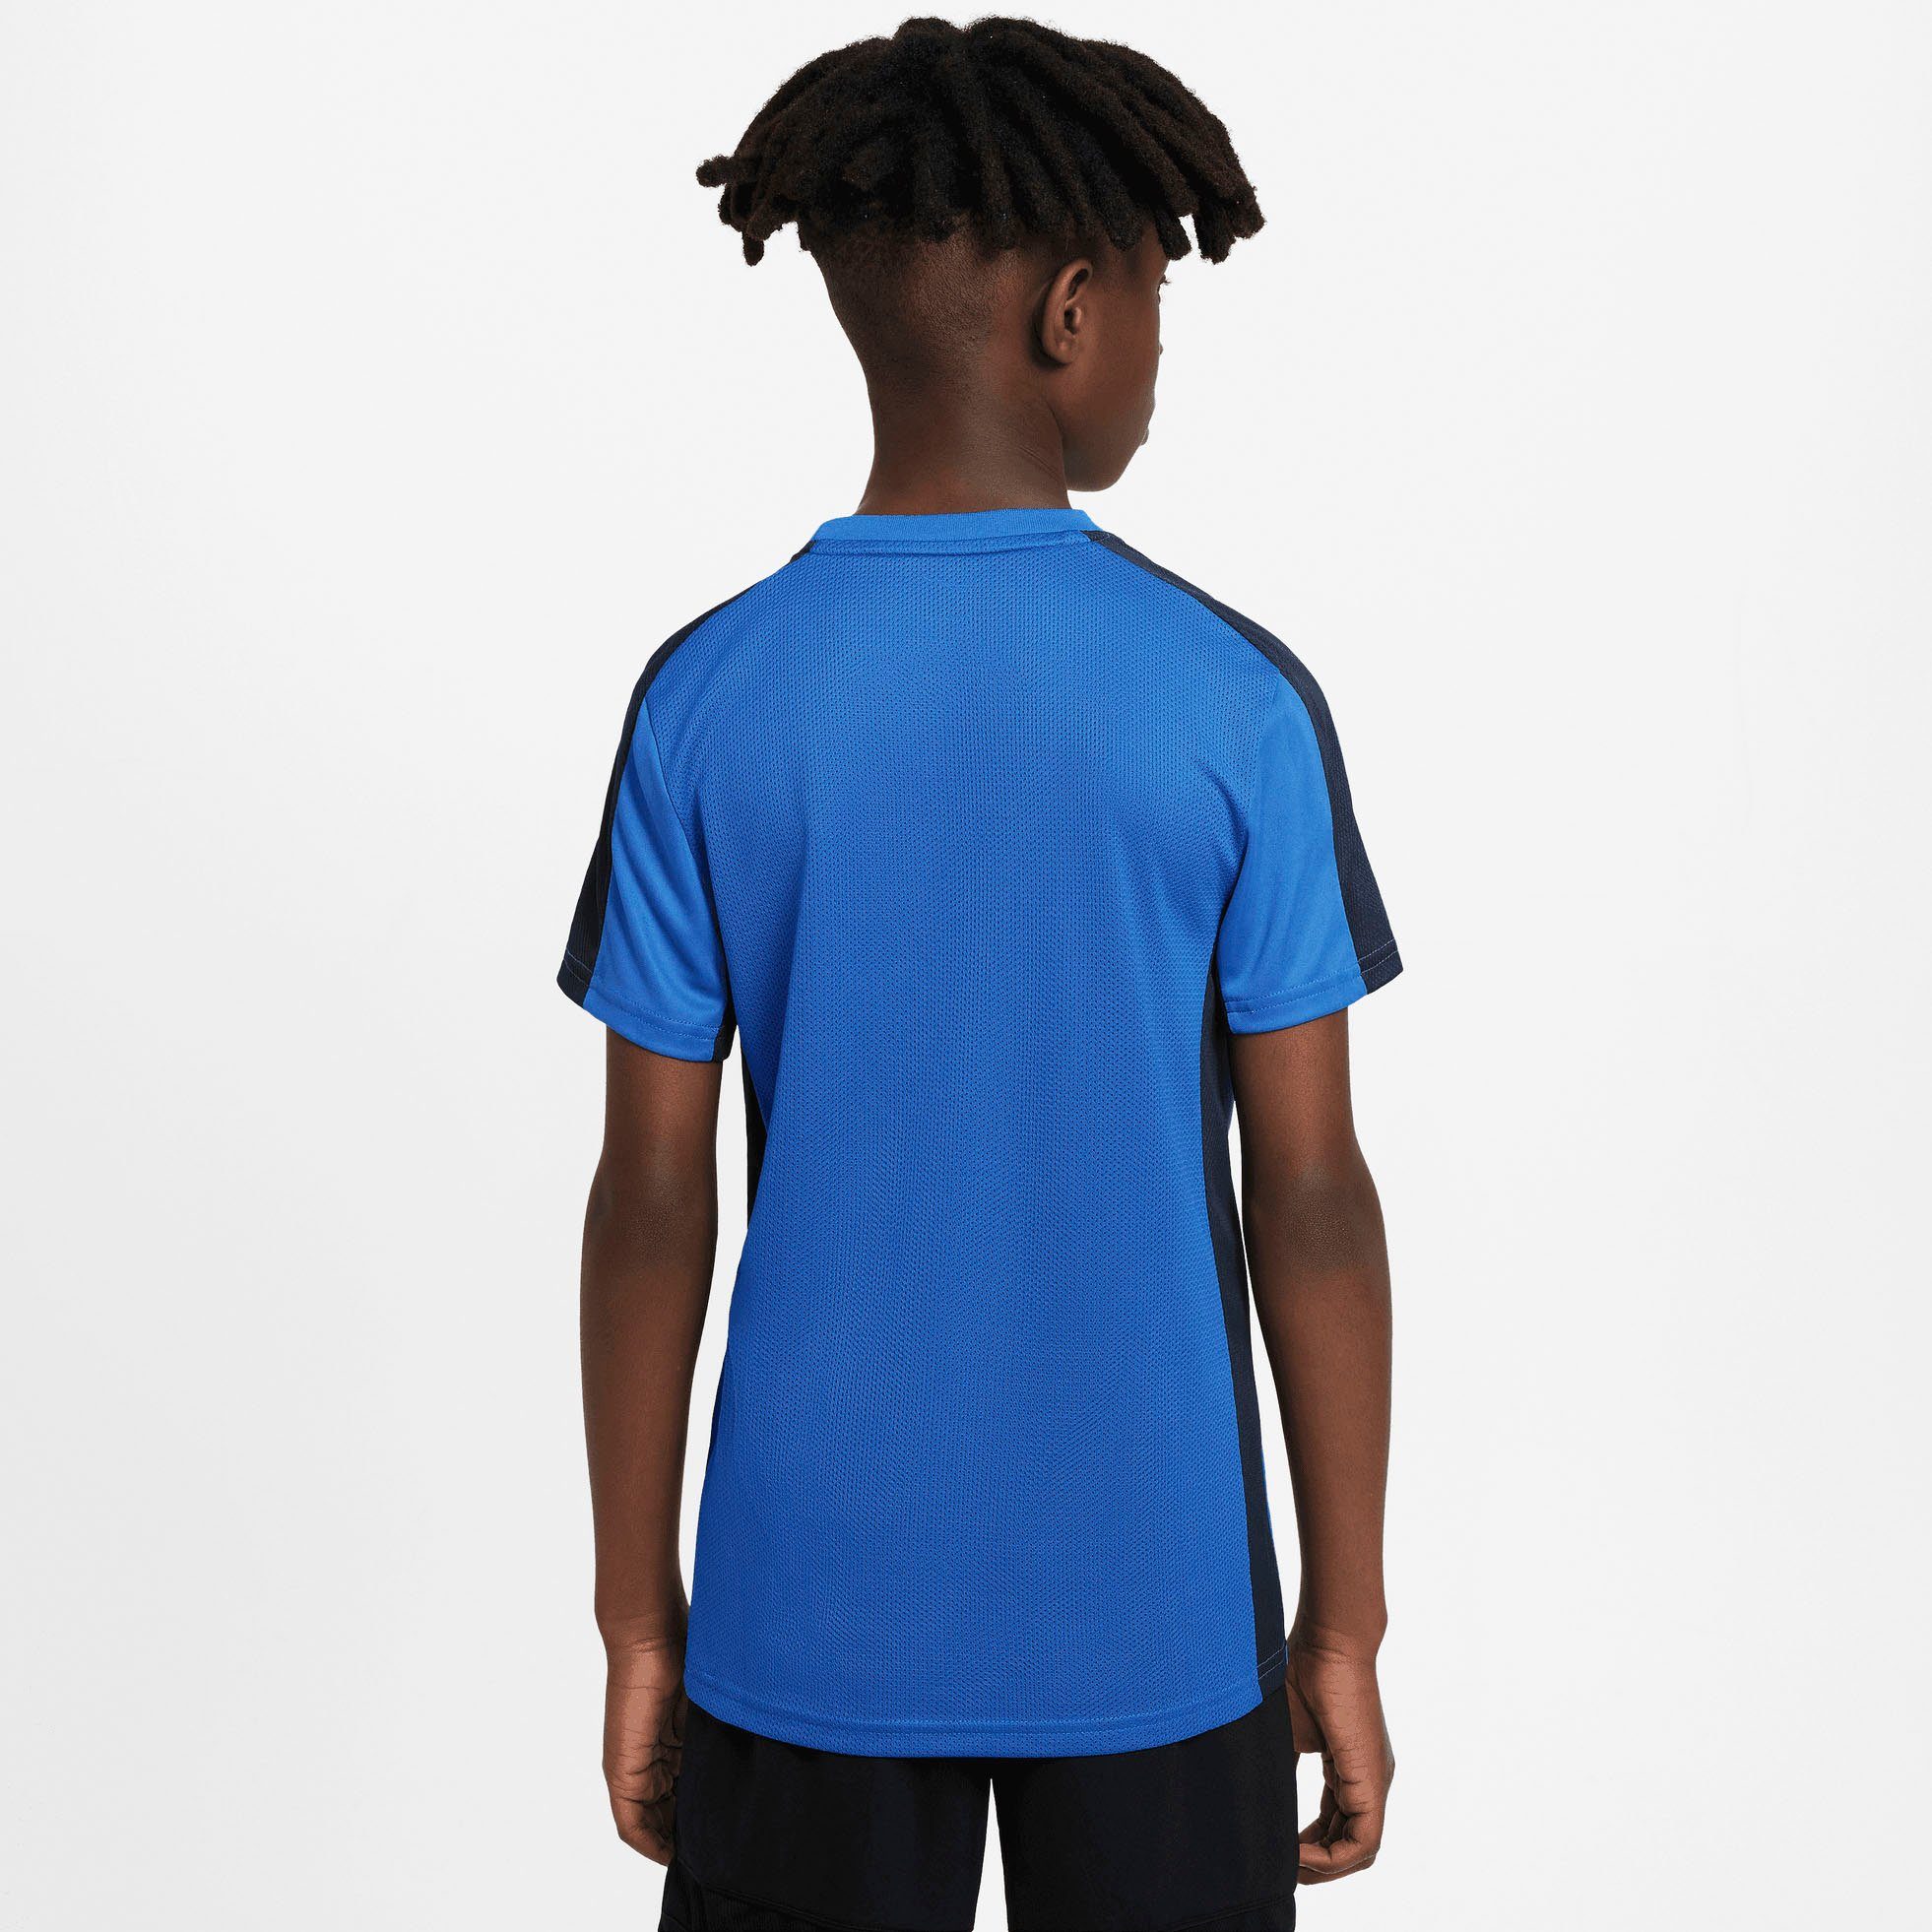 ROYAL BLUE/OBSIDIAN/WHITE TOP ACADEMY Trainingsshirt Nike KIDS' DRI-FIT